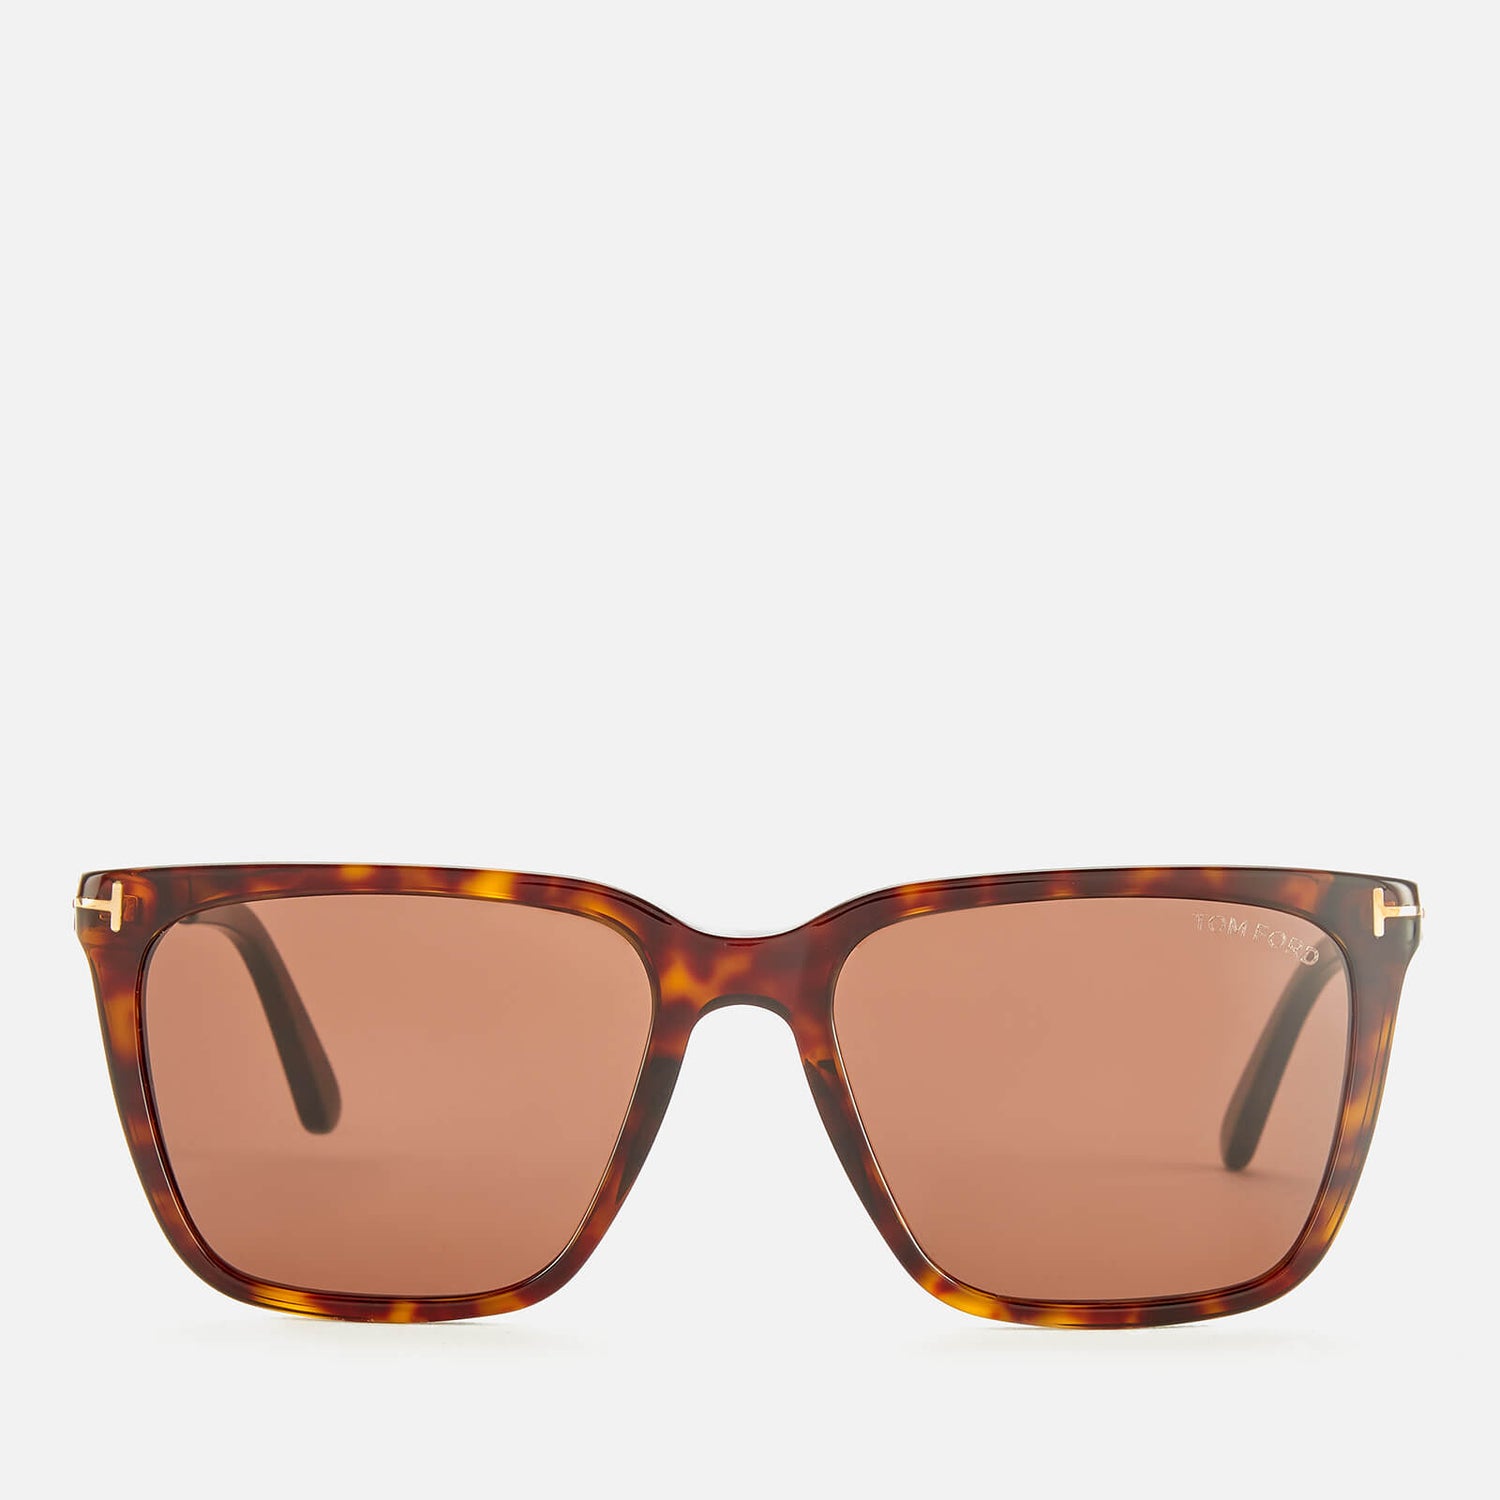 Tom Ford Men's Garret Sunglasses - Brown/Gold